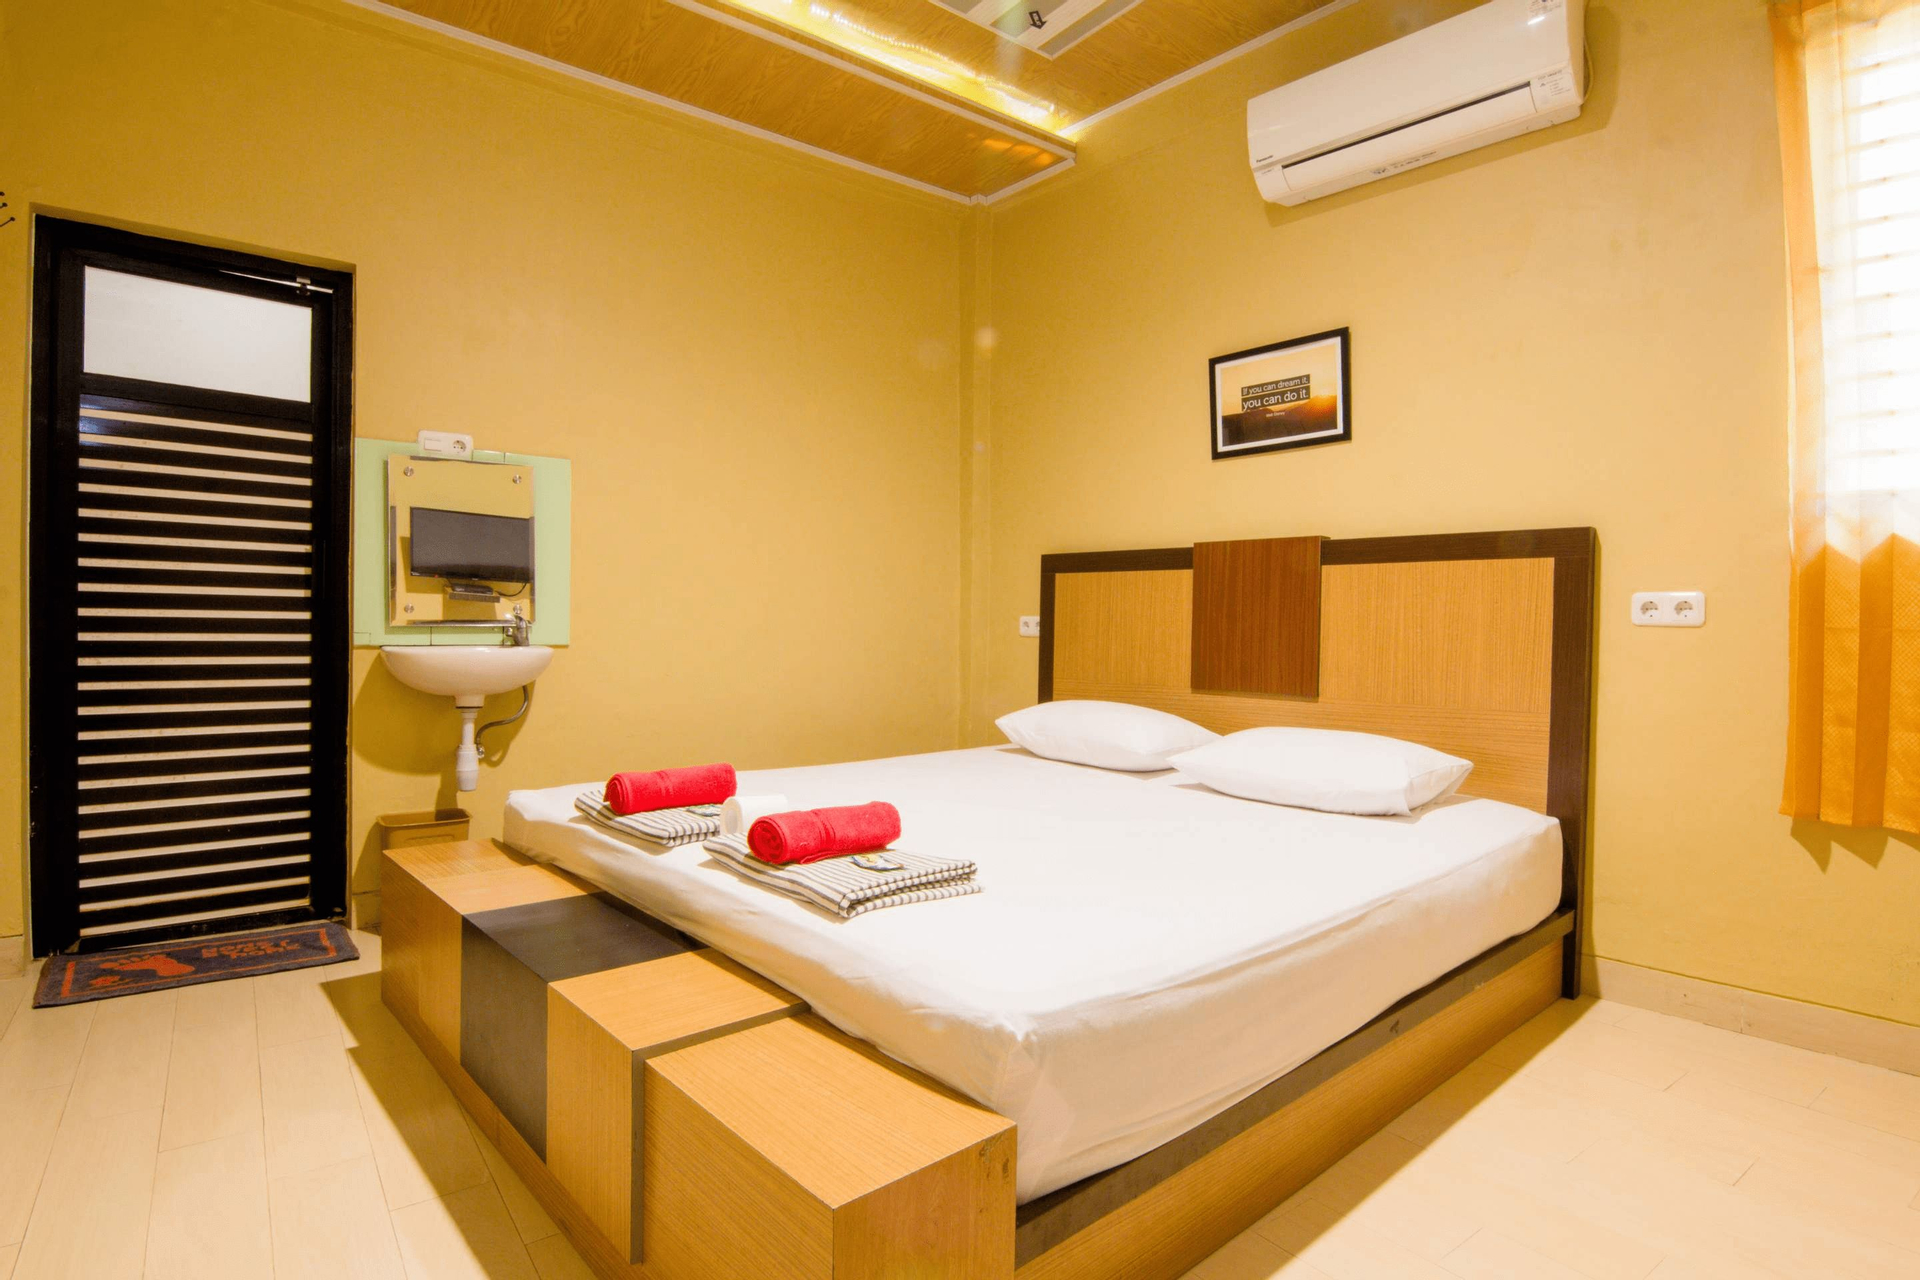 Bedroom 1, Yani Homestay, Padang